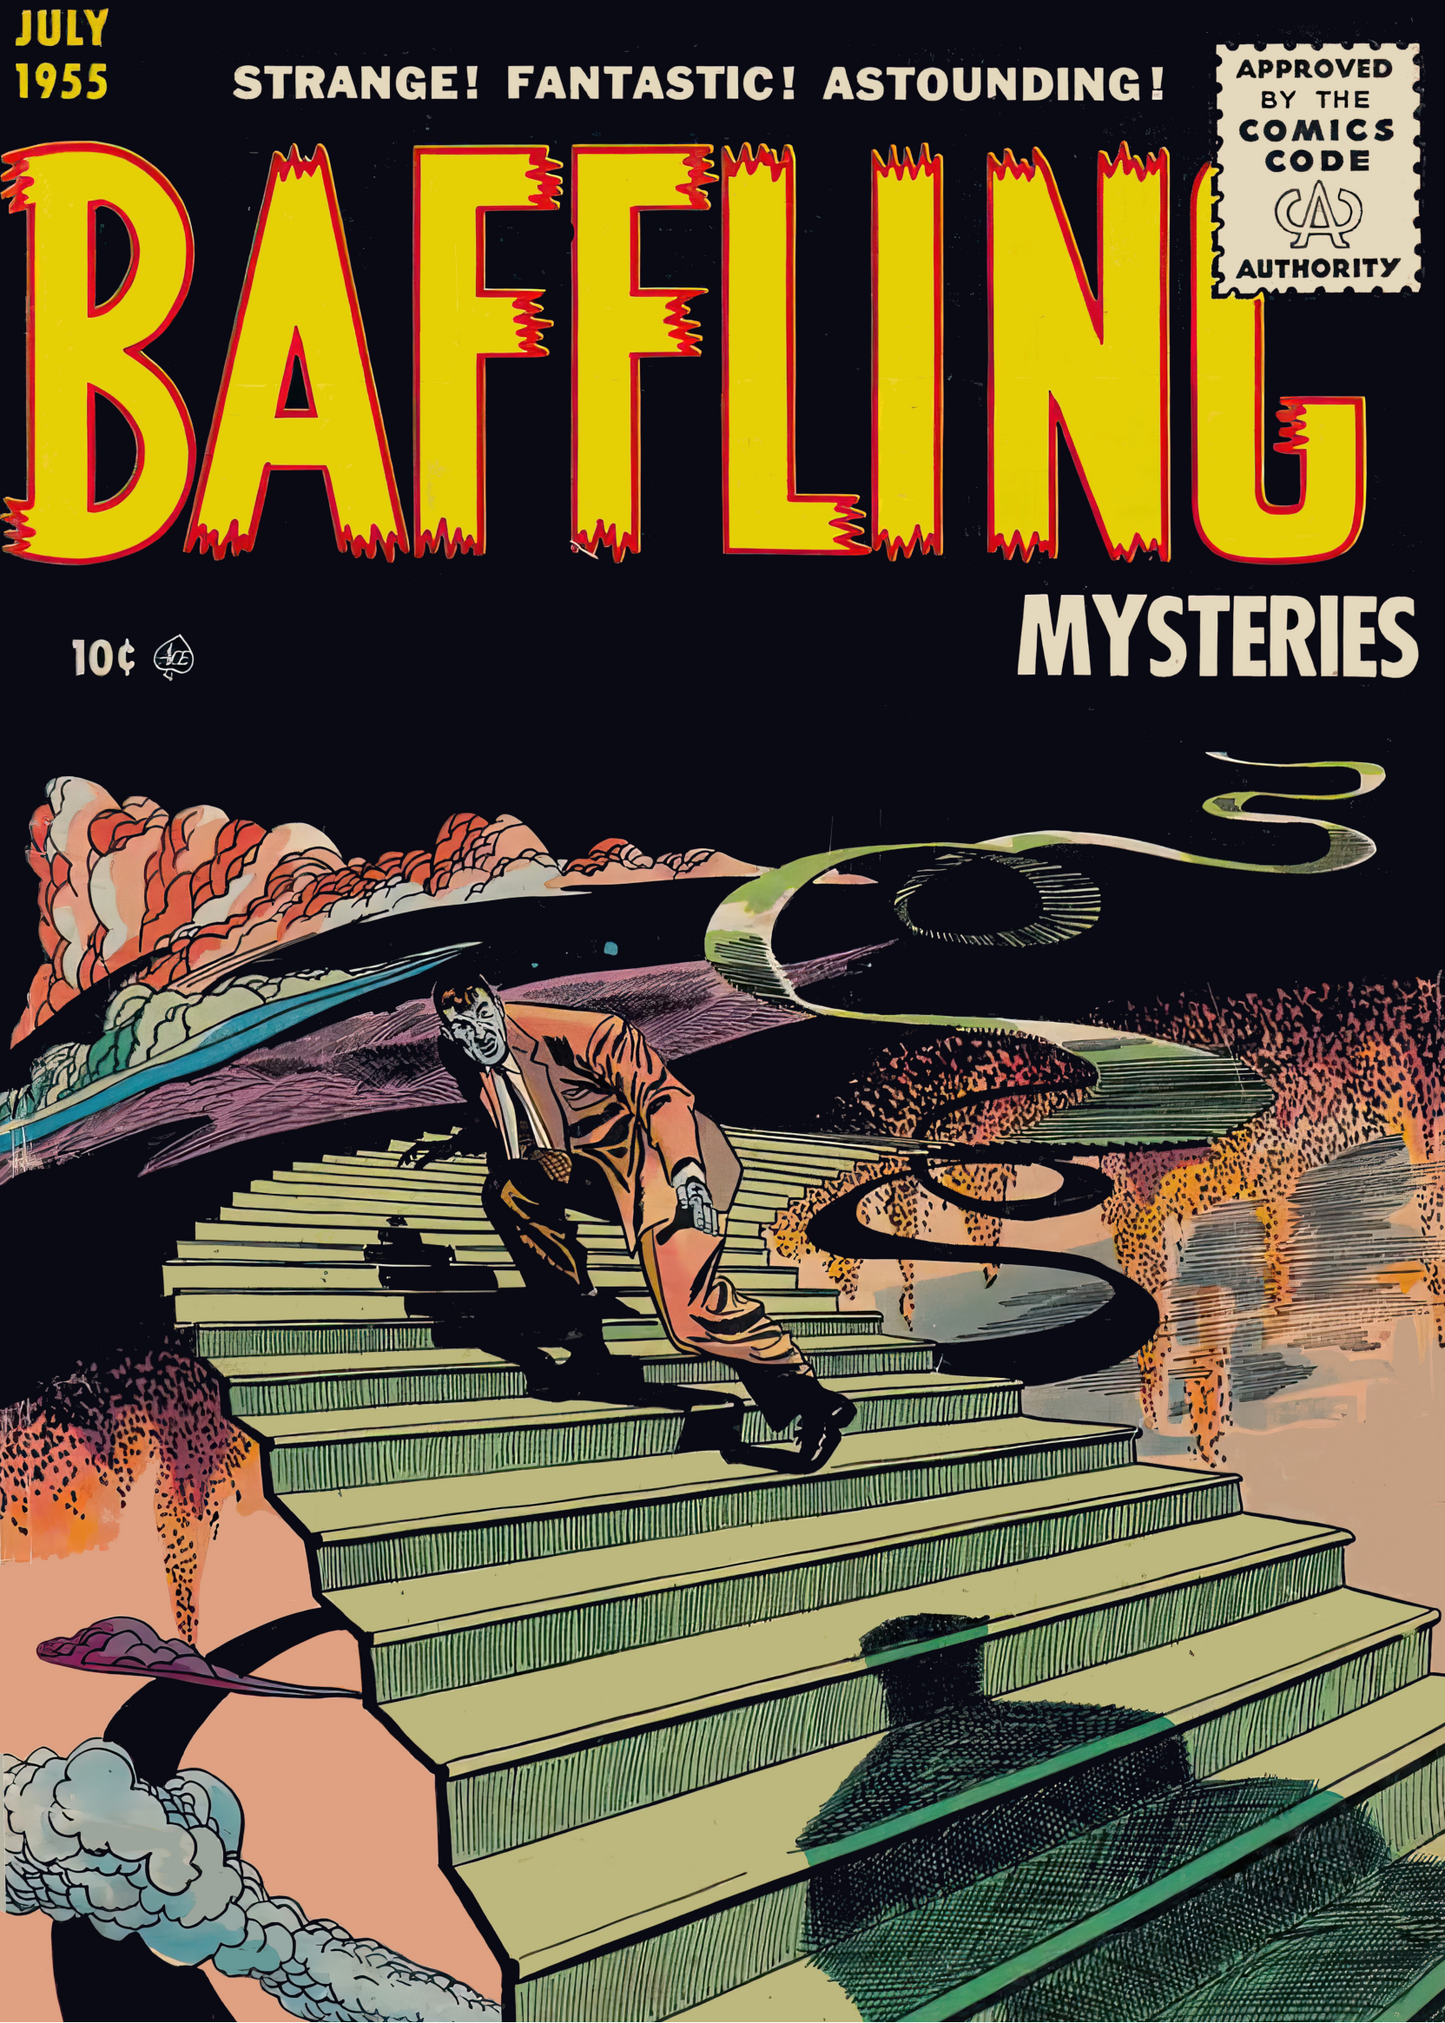 #971 Baffling mysteries